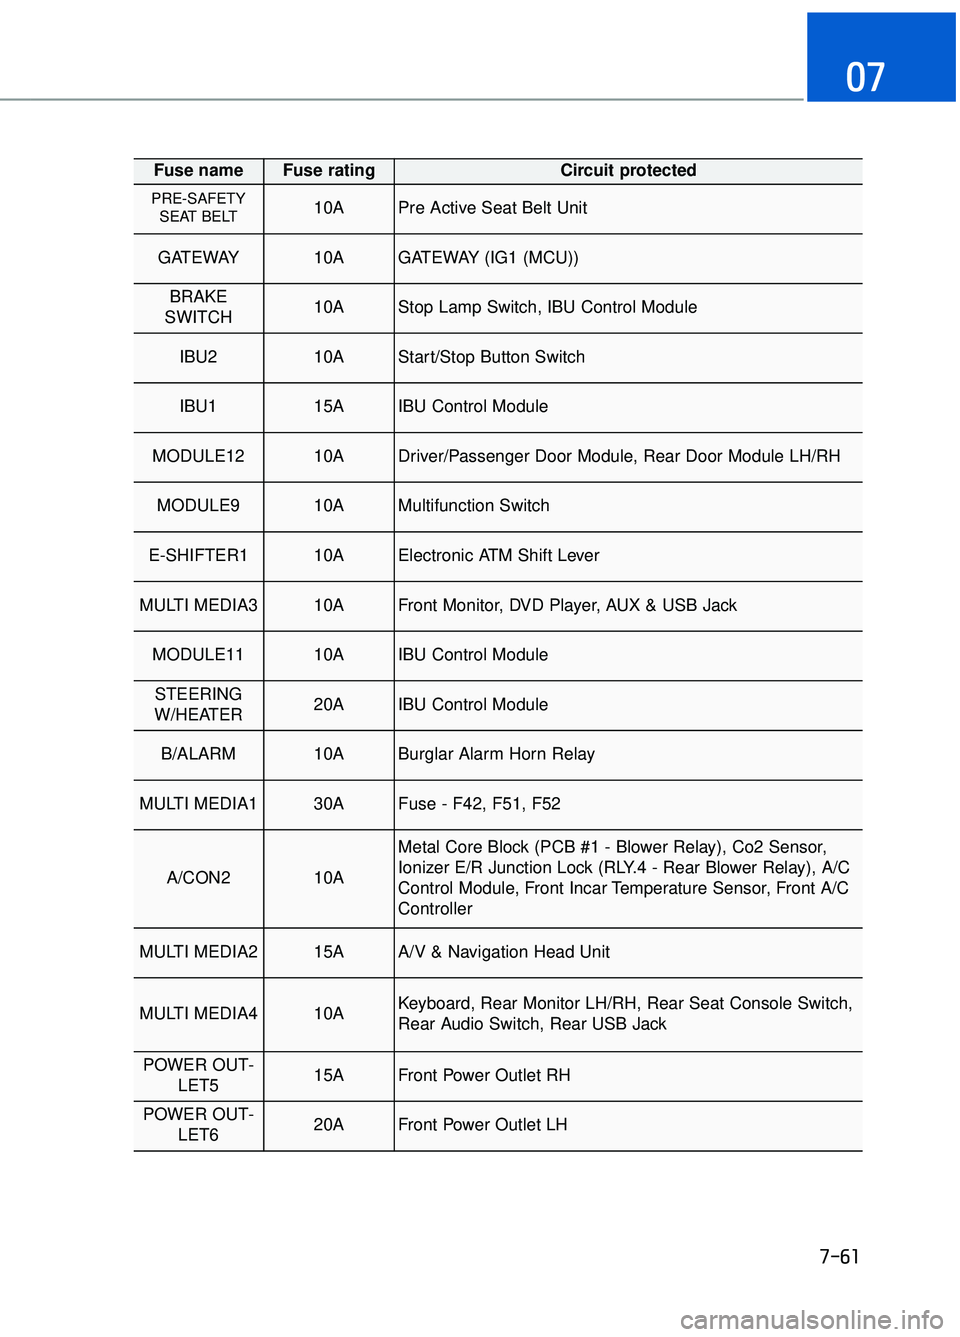 GENESIS G90 2018  Owners Manual 7-61
07
Fuse name Fuse rating Circuit protected
PRE-SAFETYSEAT BELT 10APre Active Seat Belt Unit
GATEWAY 10AGATEWAY (IG1 (MCU))
BRAKE
SWITCH 10AStop Lamp Switch, IBU Control Module
IBU2 10AStart/Stop 